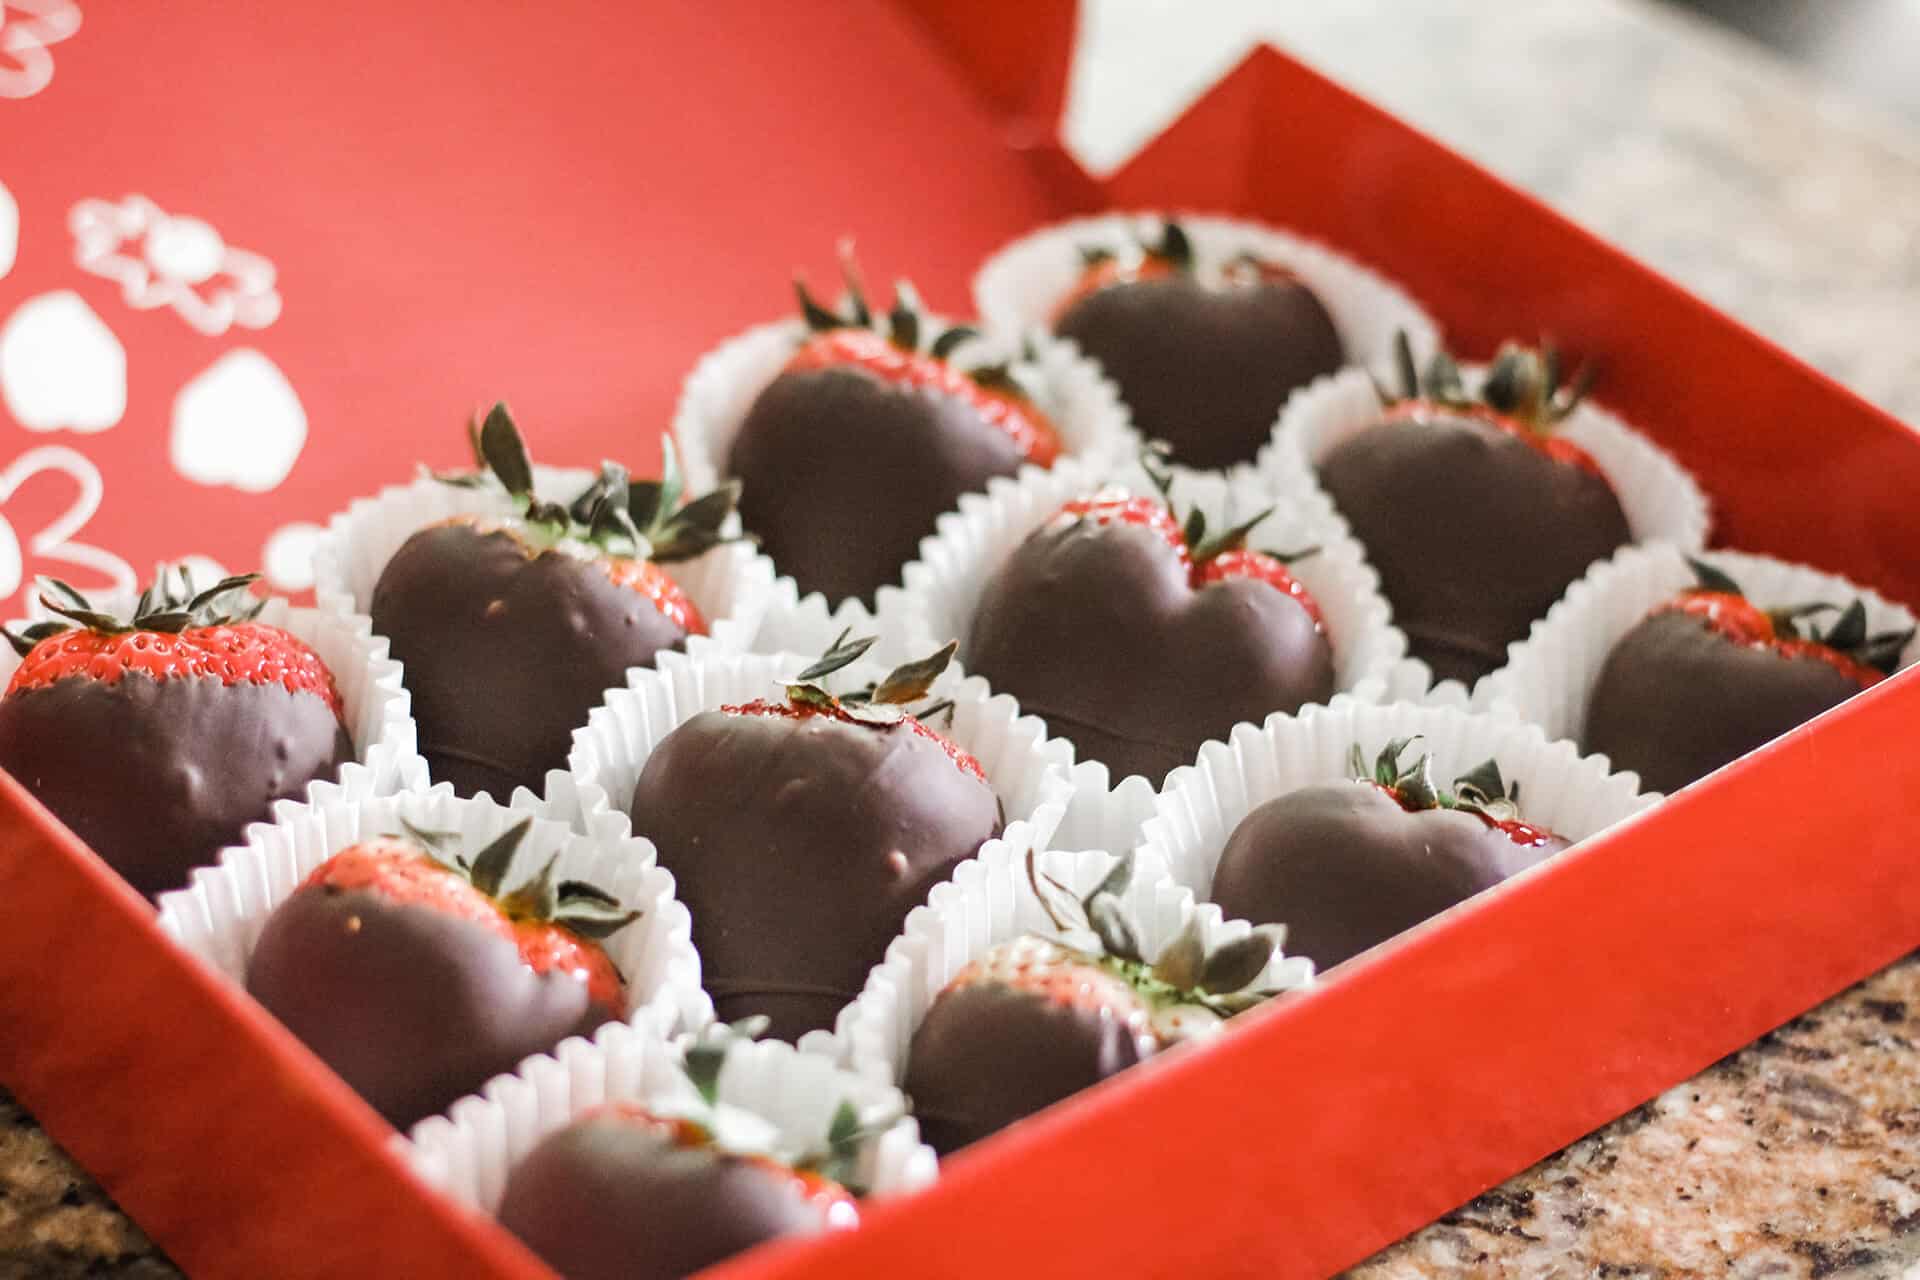 Chocolate coated strawberries in a box